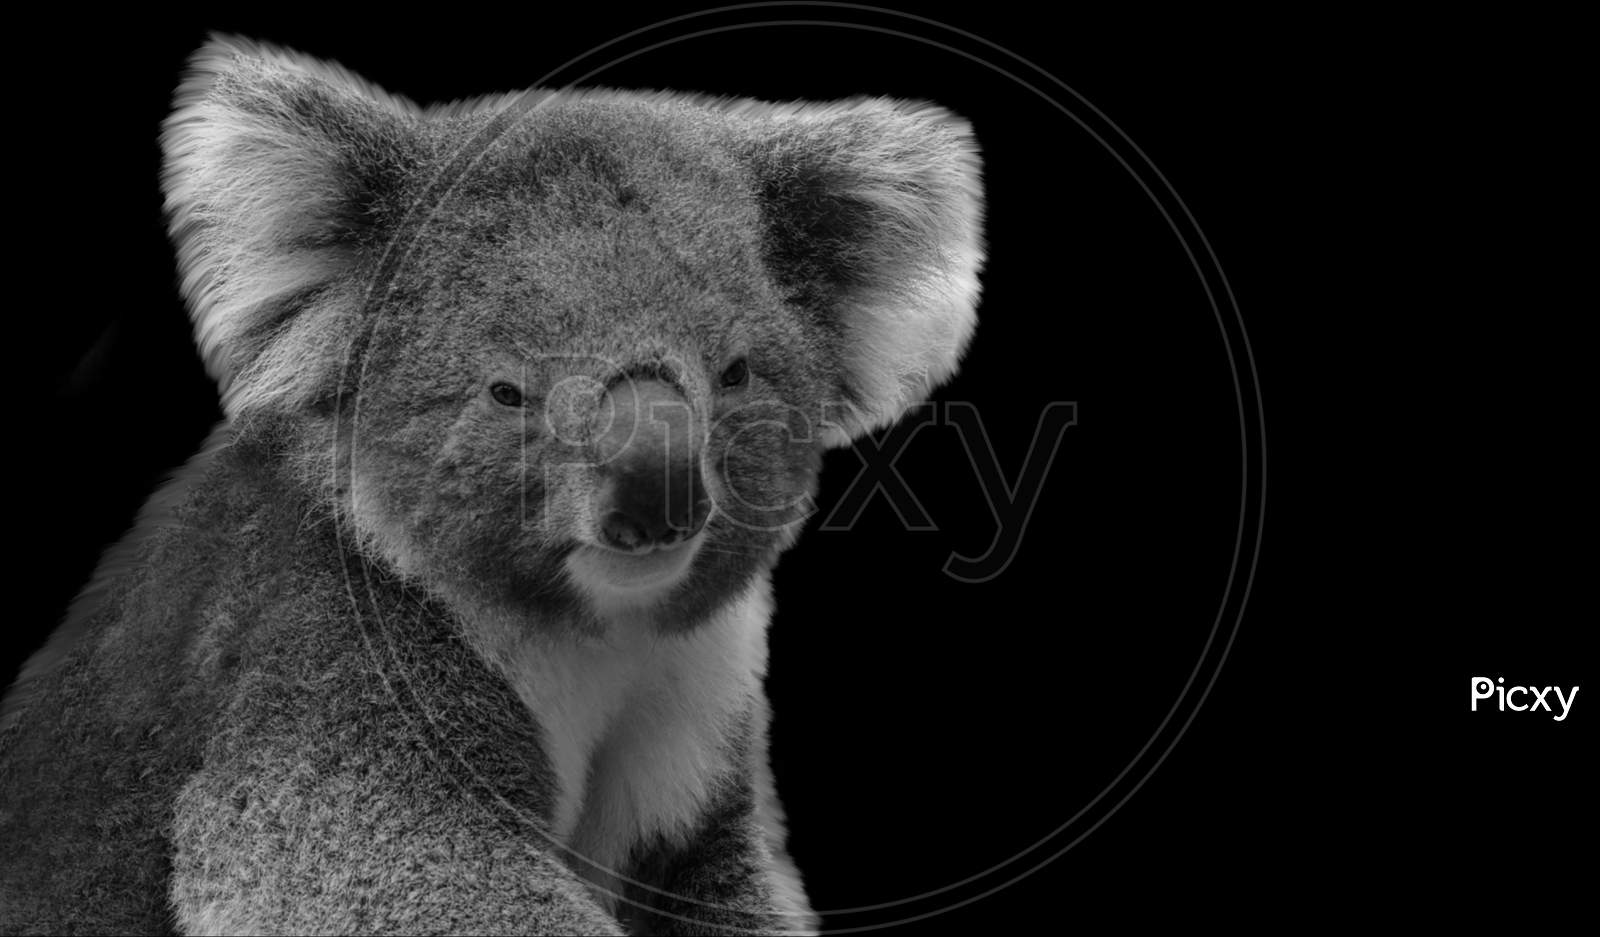 Very Cute Koala Sitting On The Black Background